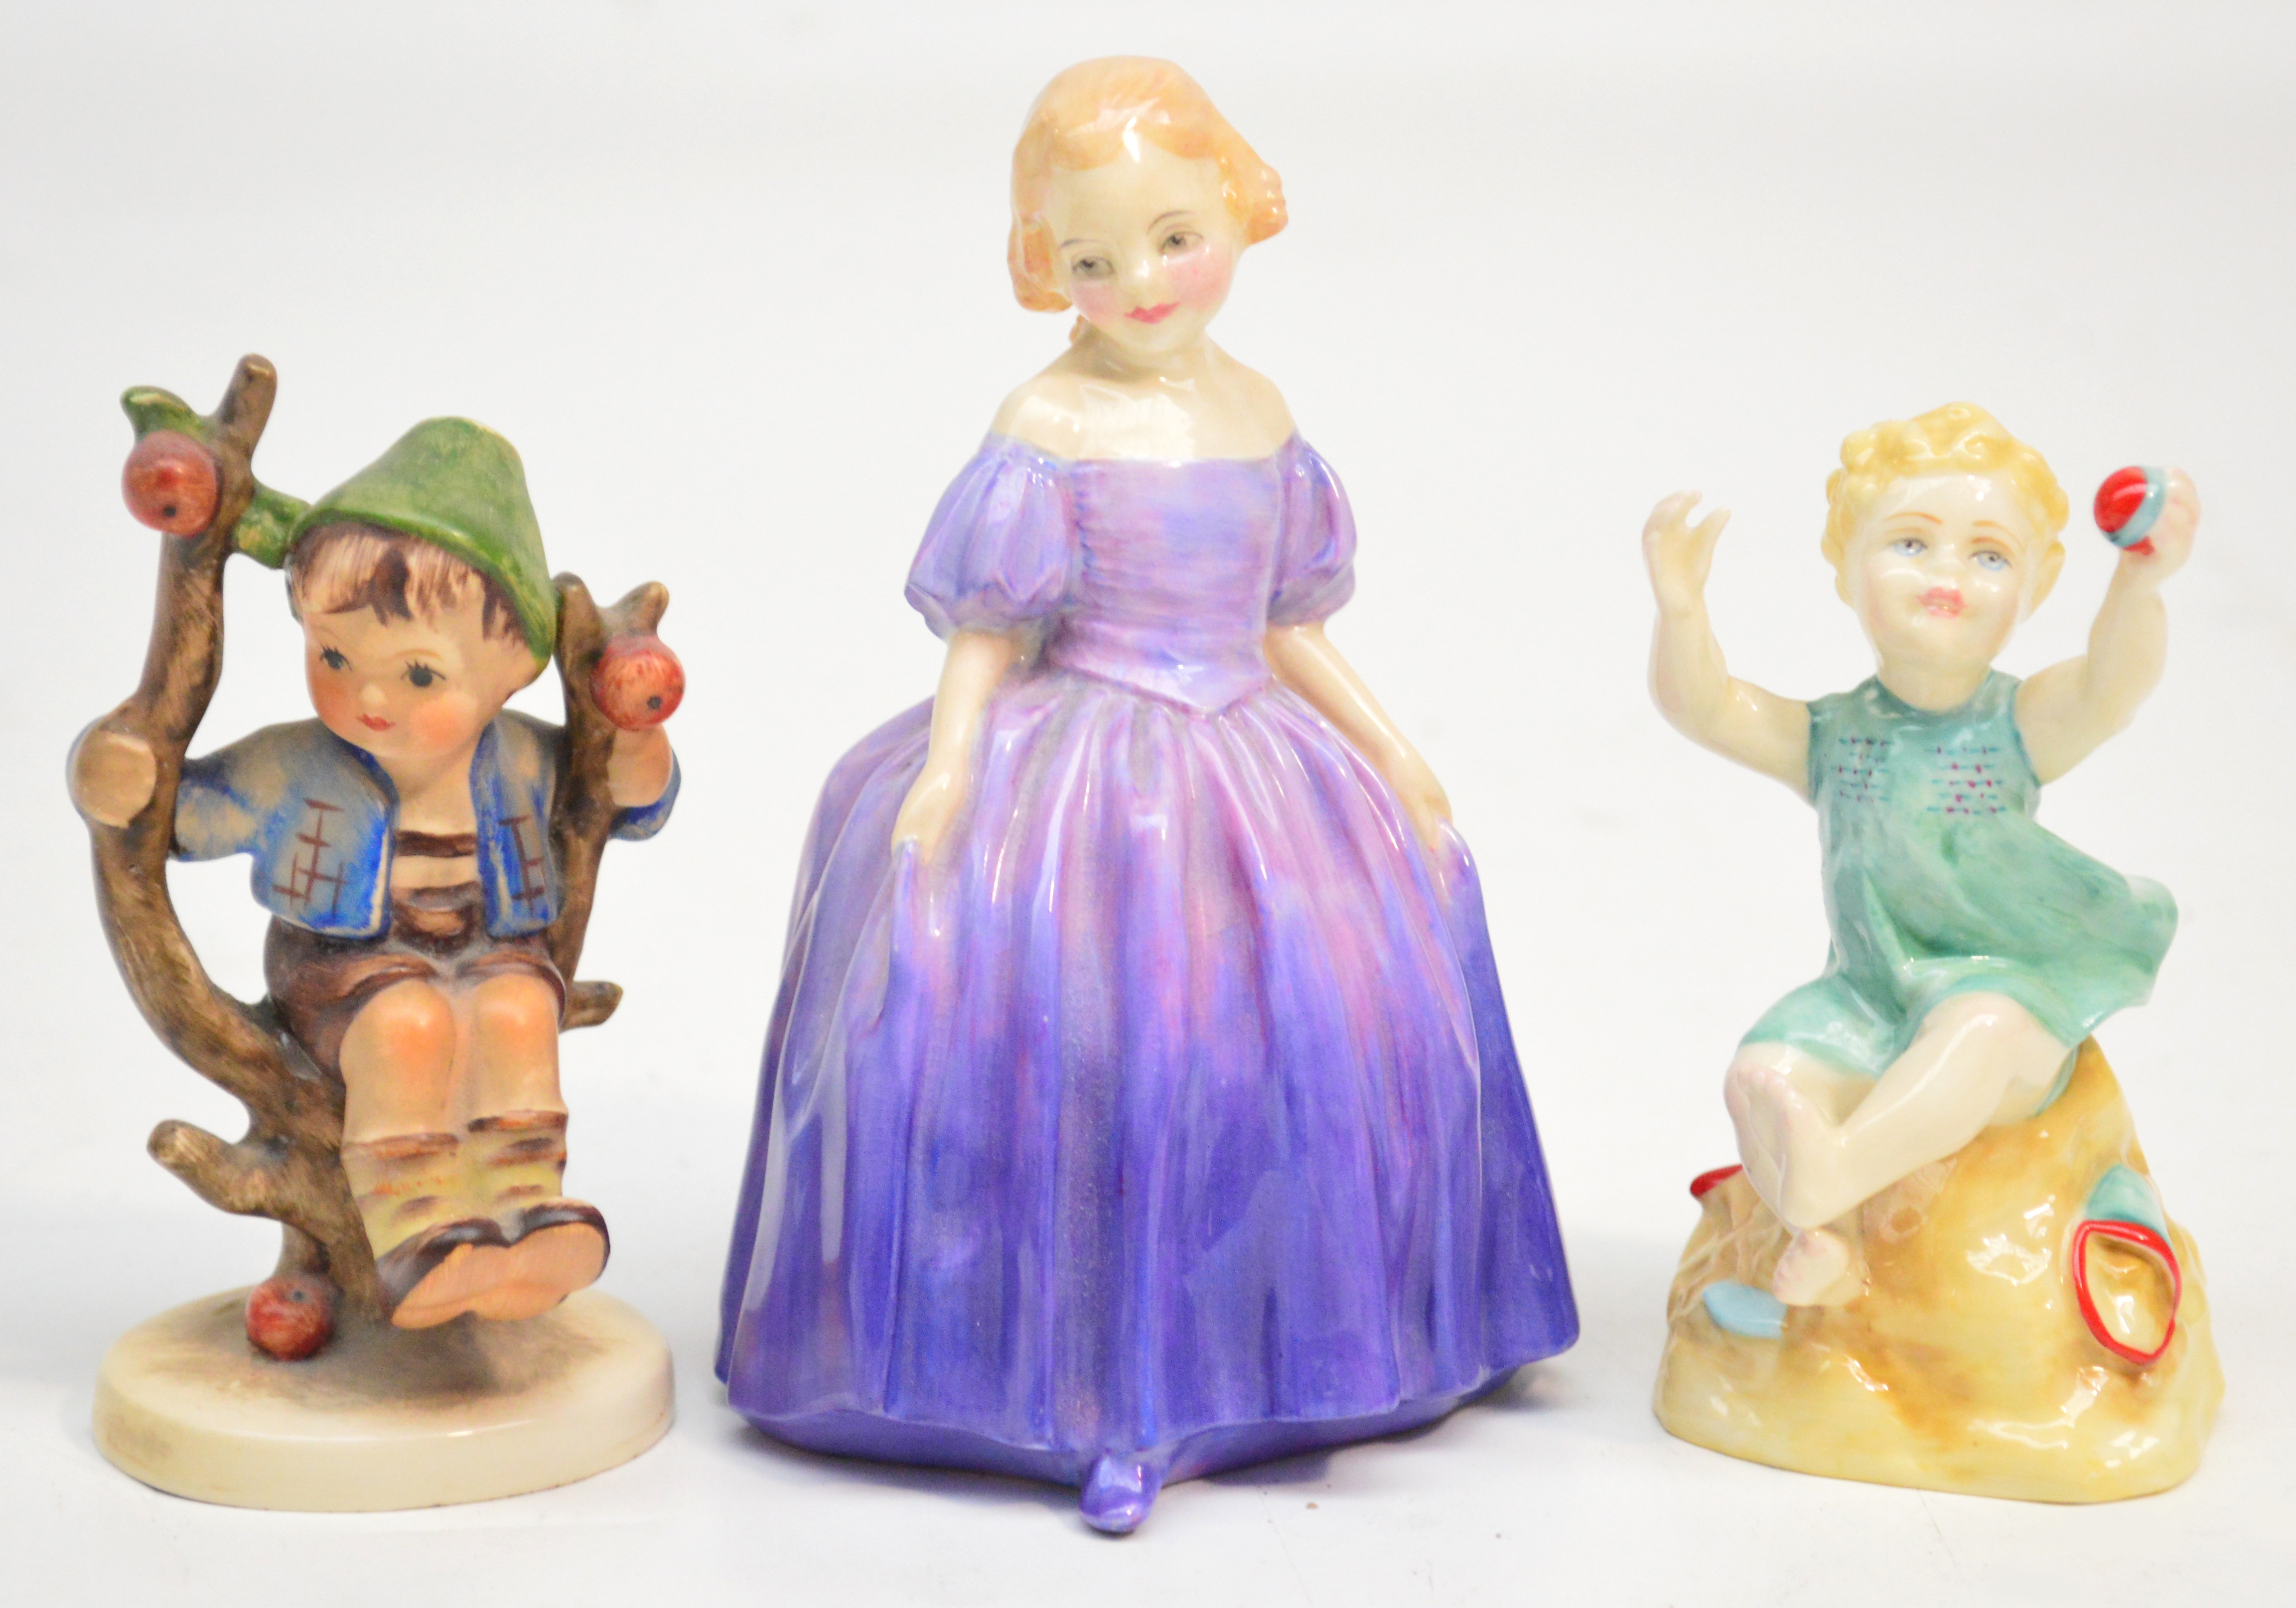 A Royal Doulton figurine HN1370 "Marie", a Royal Worcester figure "Sunshine Days" and a Hummel